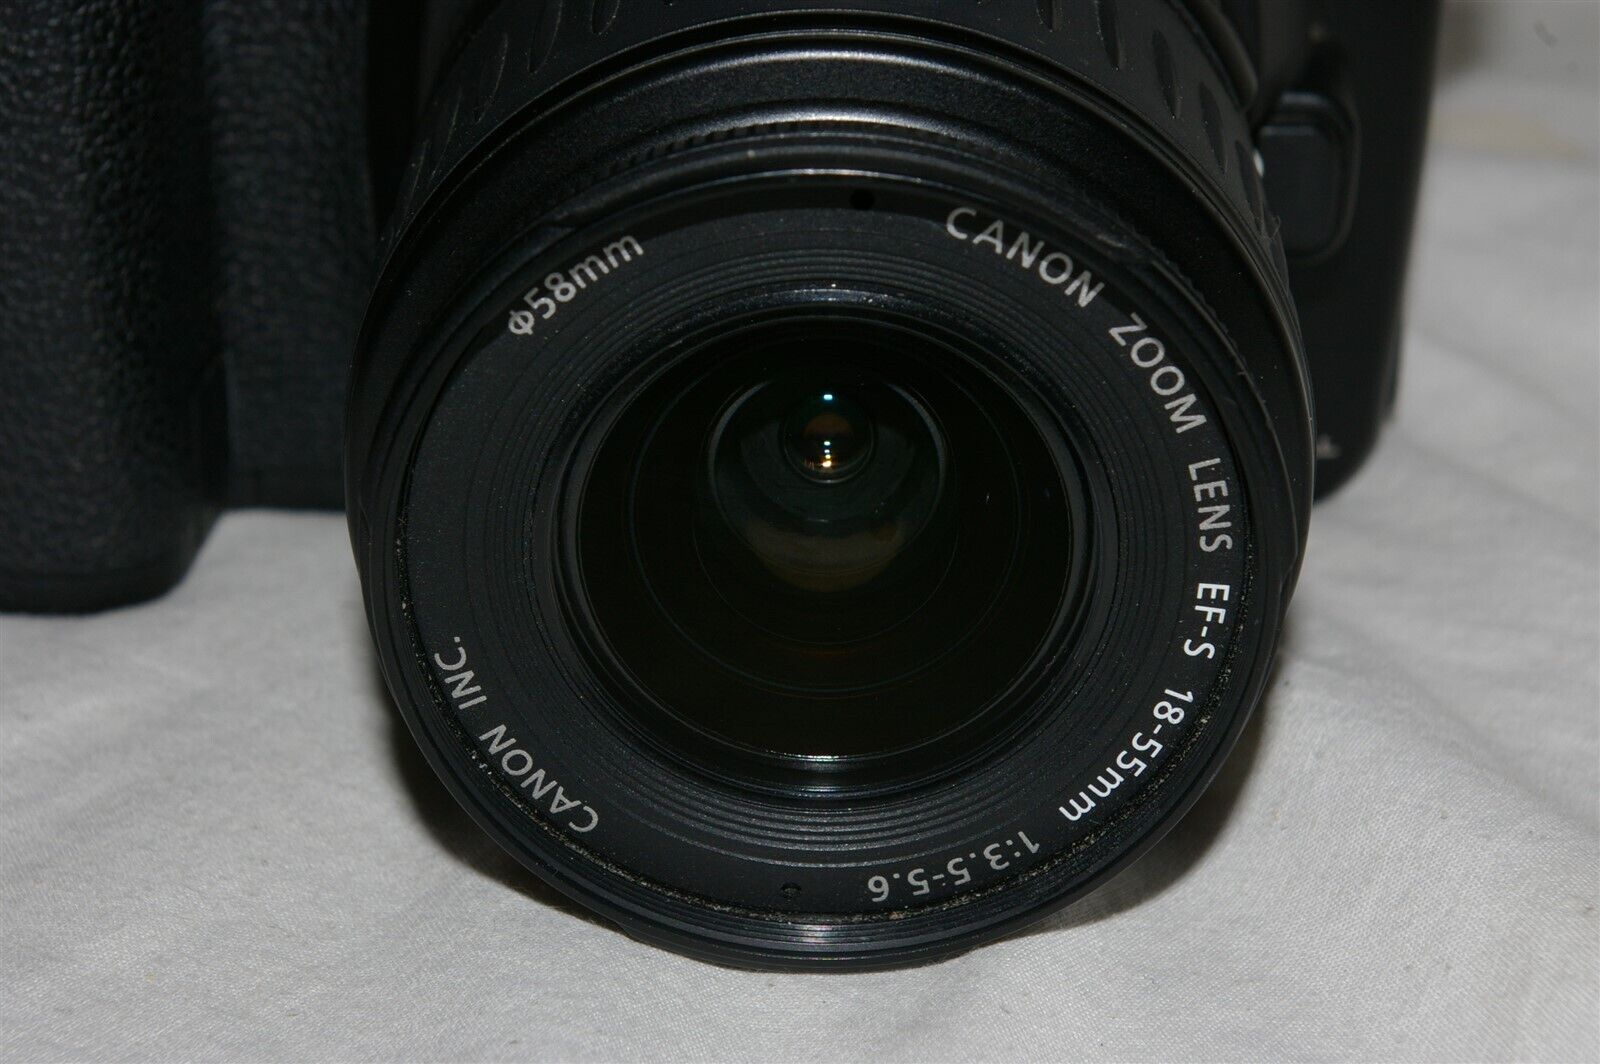 Canon EOS 20D Digital SLR 8.0MP Camera w/18-55MM Lens TESTED!